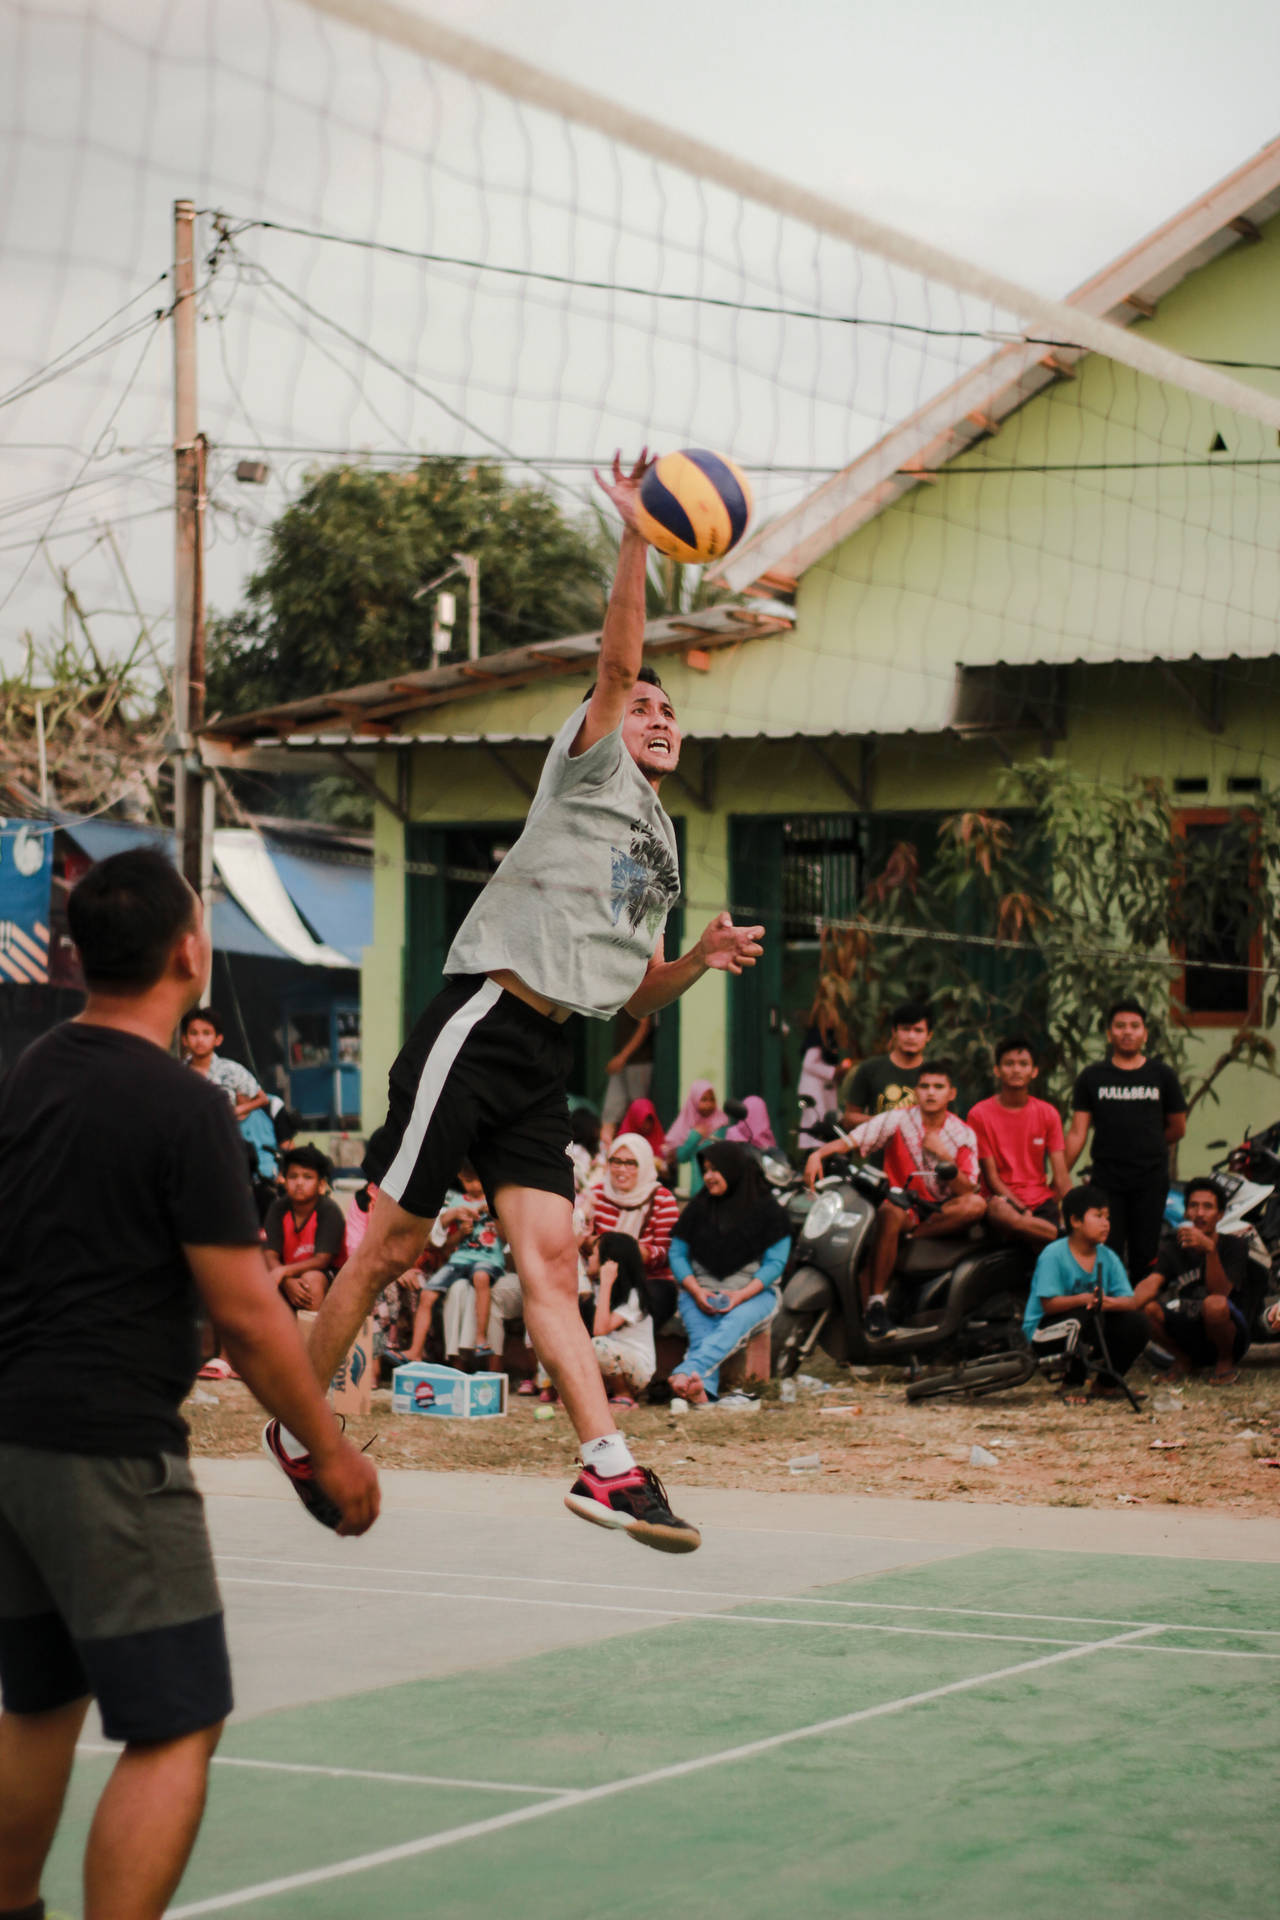 Volleyball Match At A Village